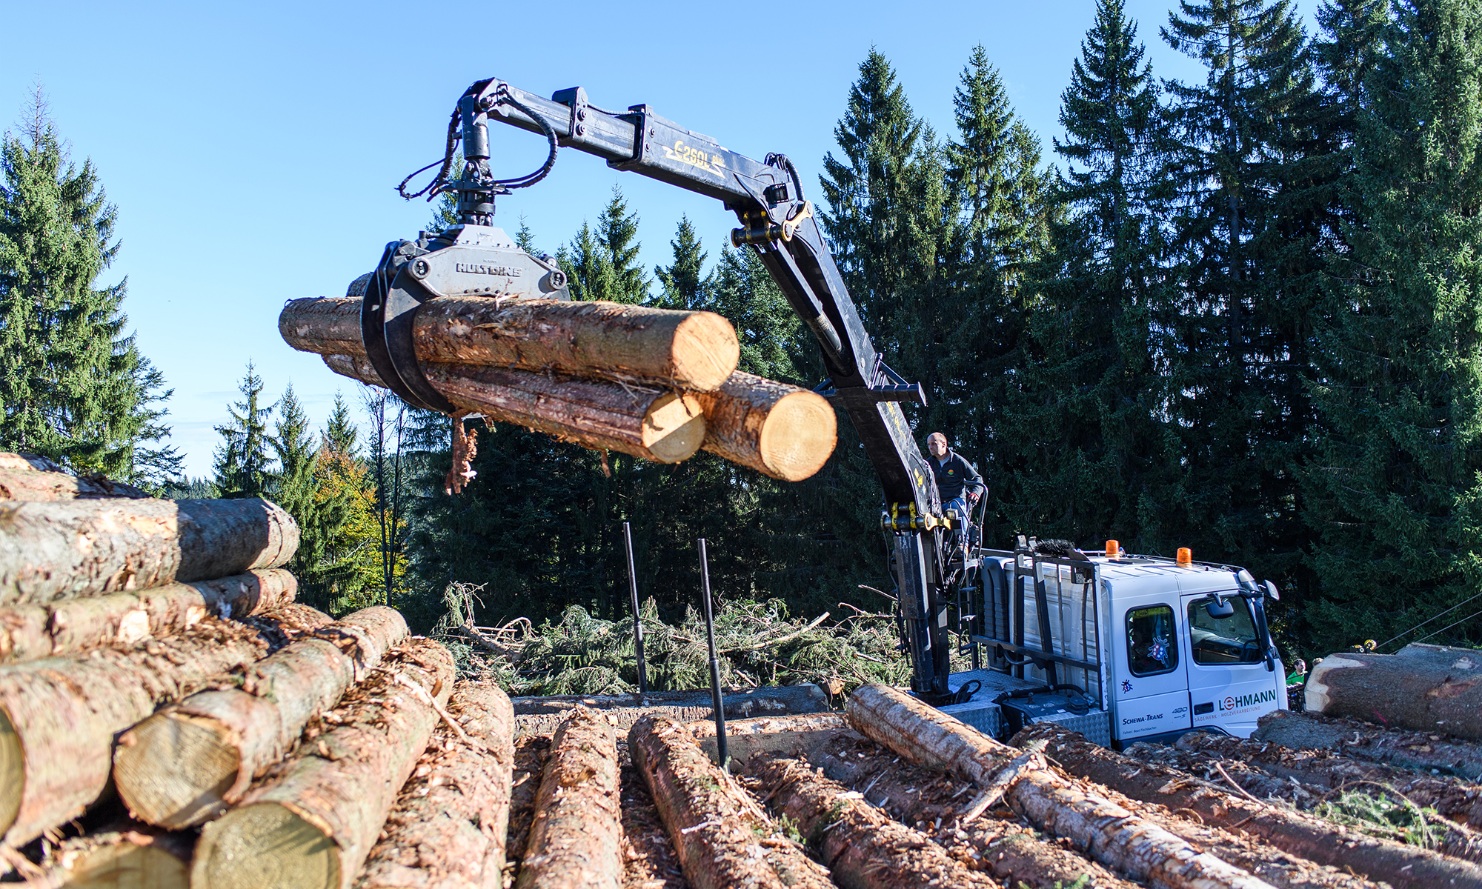 Loading logs onto a truck